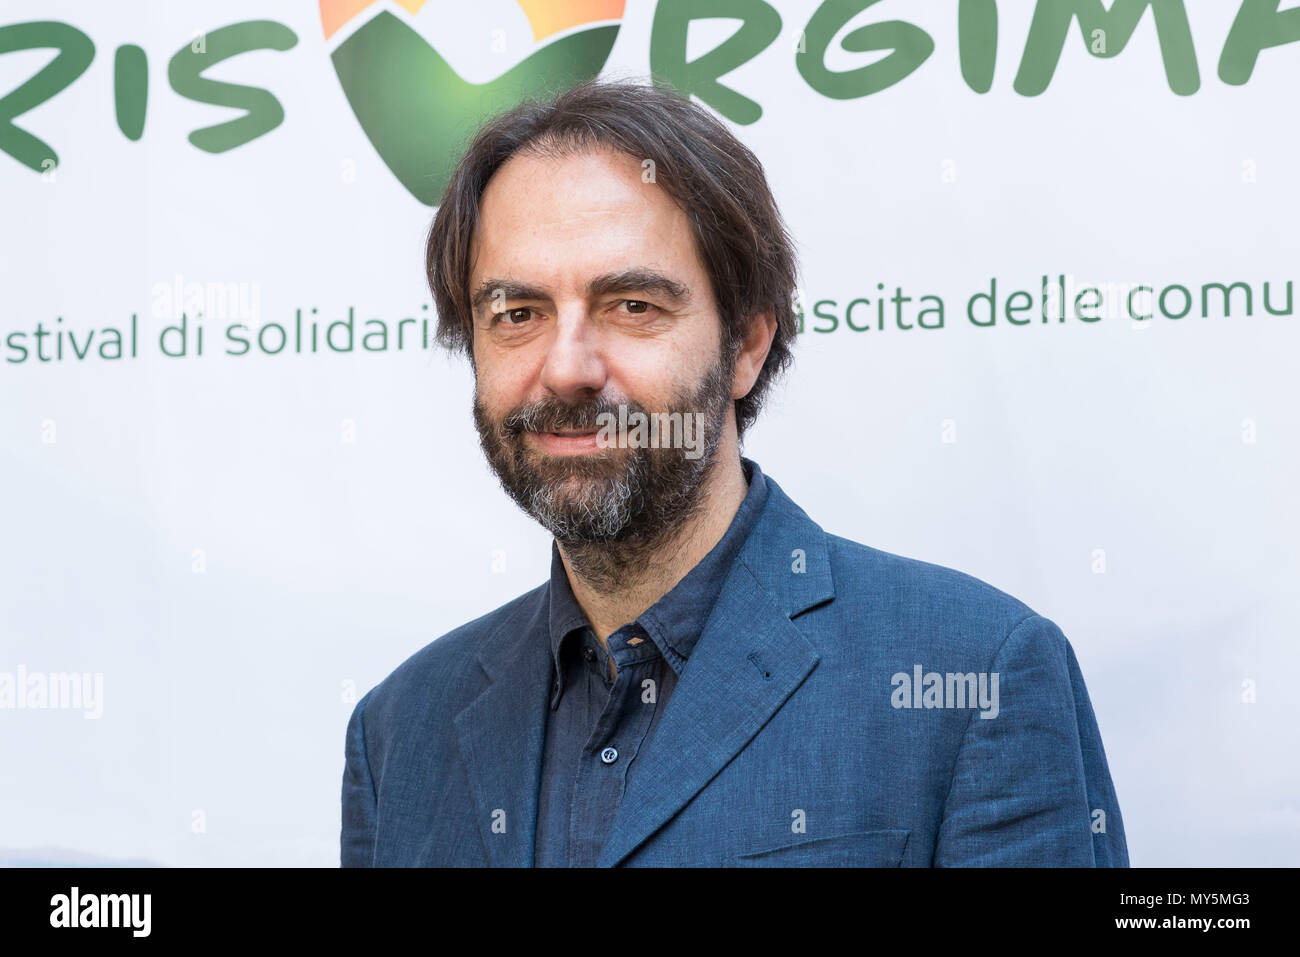 Rome, Italy. 6th Jun, 2018. Neri Marcoré attending the photocall of RisorgiMarche Festival in Rome Credit: Silvia Gerbino/Alamy Live News Stock Photo